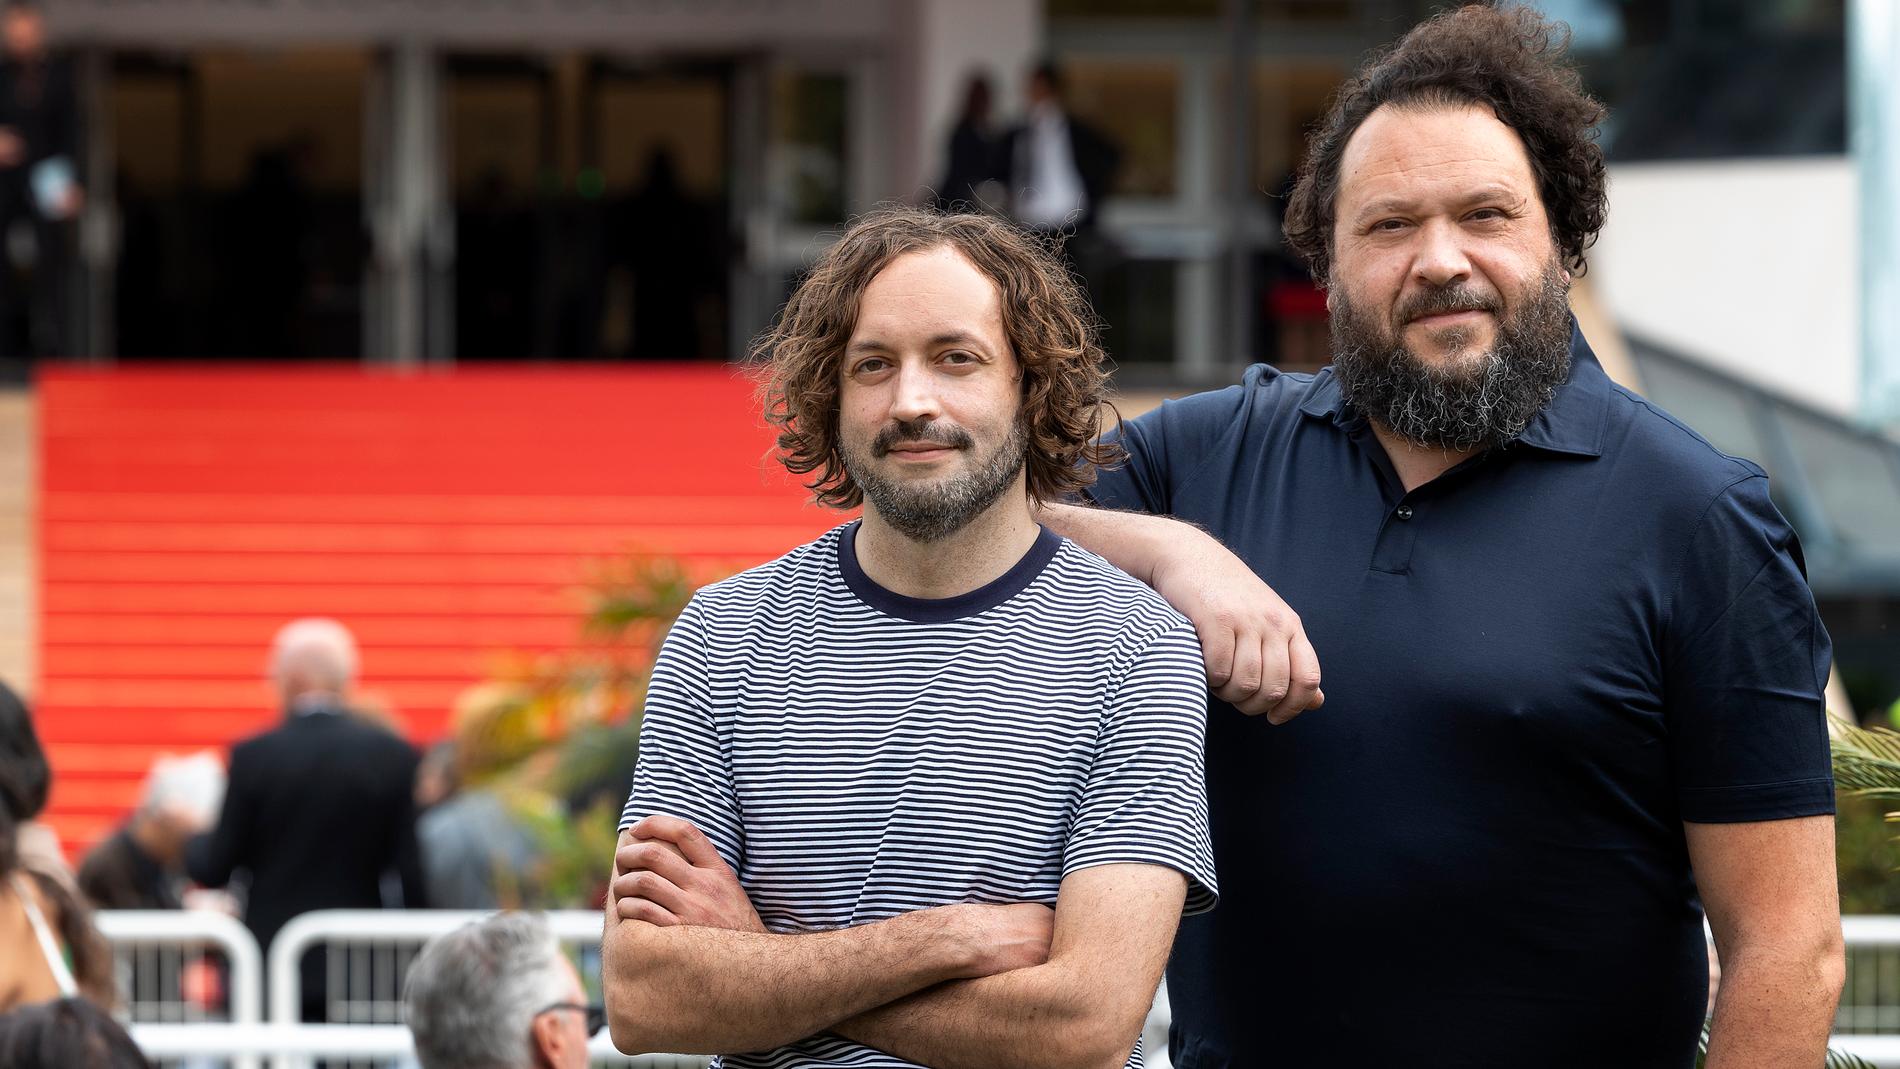 Goran Kapetanović och Alex Haridi under filmfestivalen i Cannes i Frankrike.